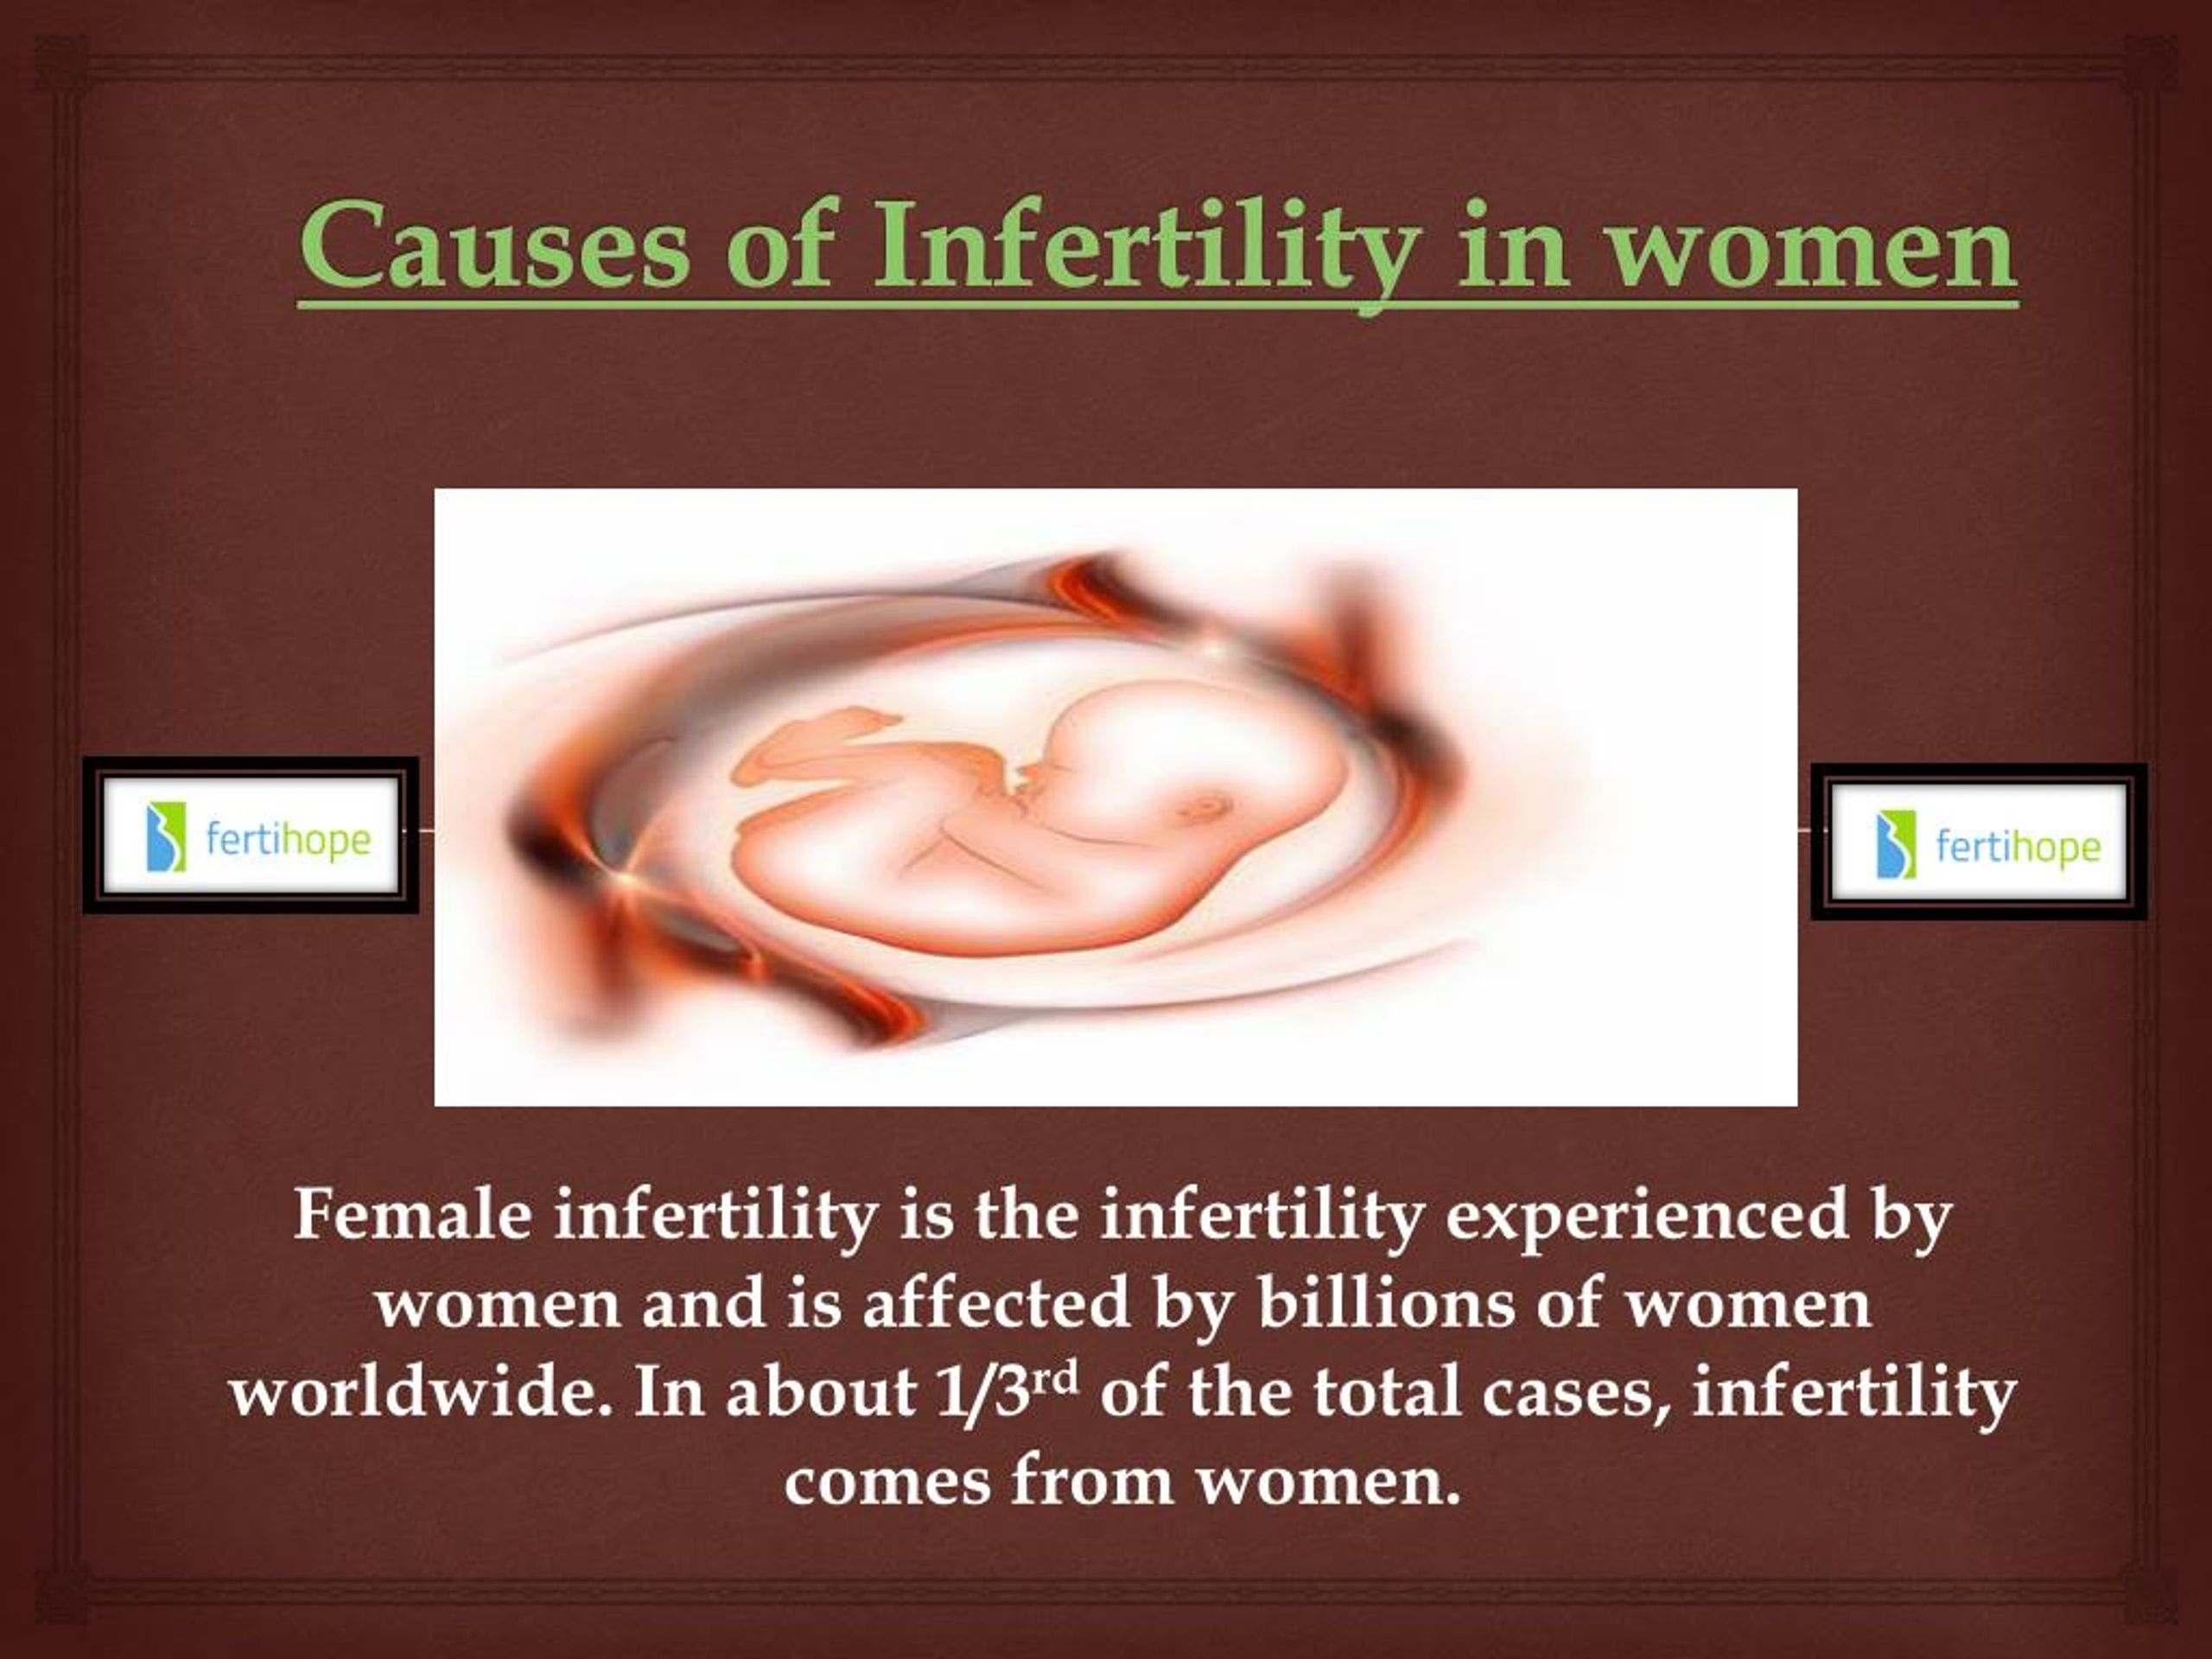 case study on infertility slideshare